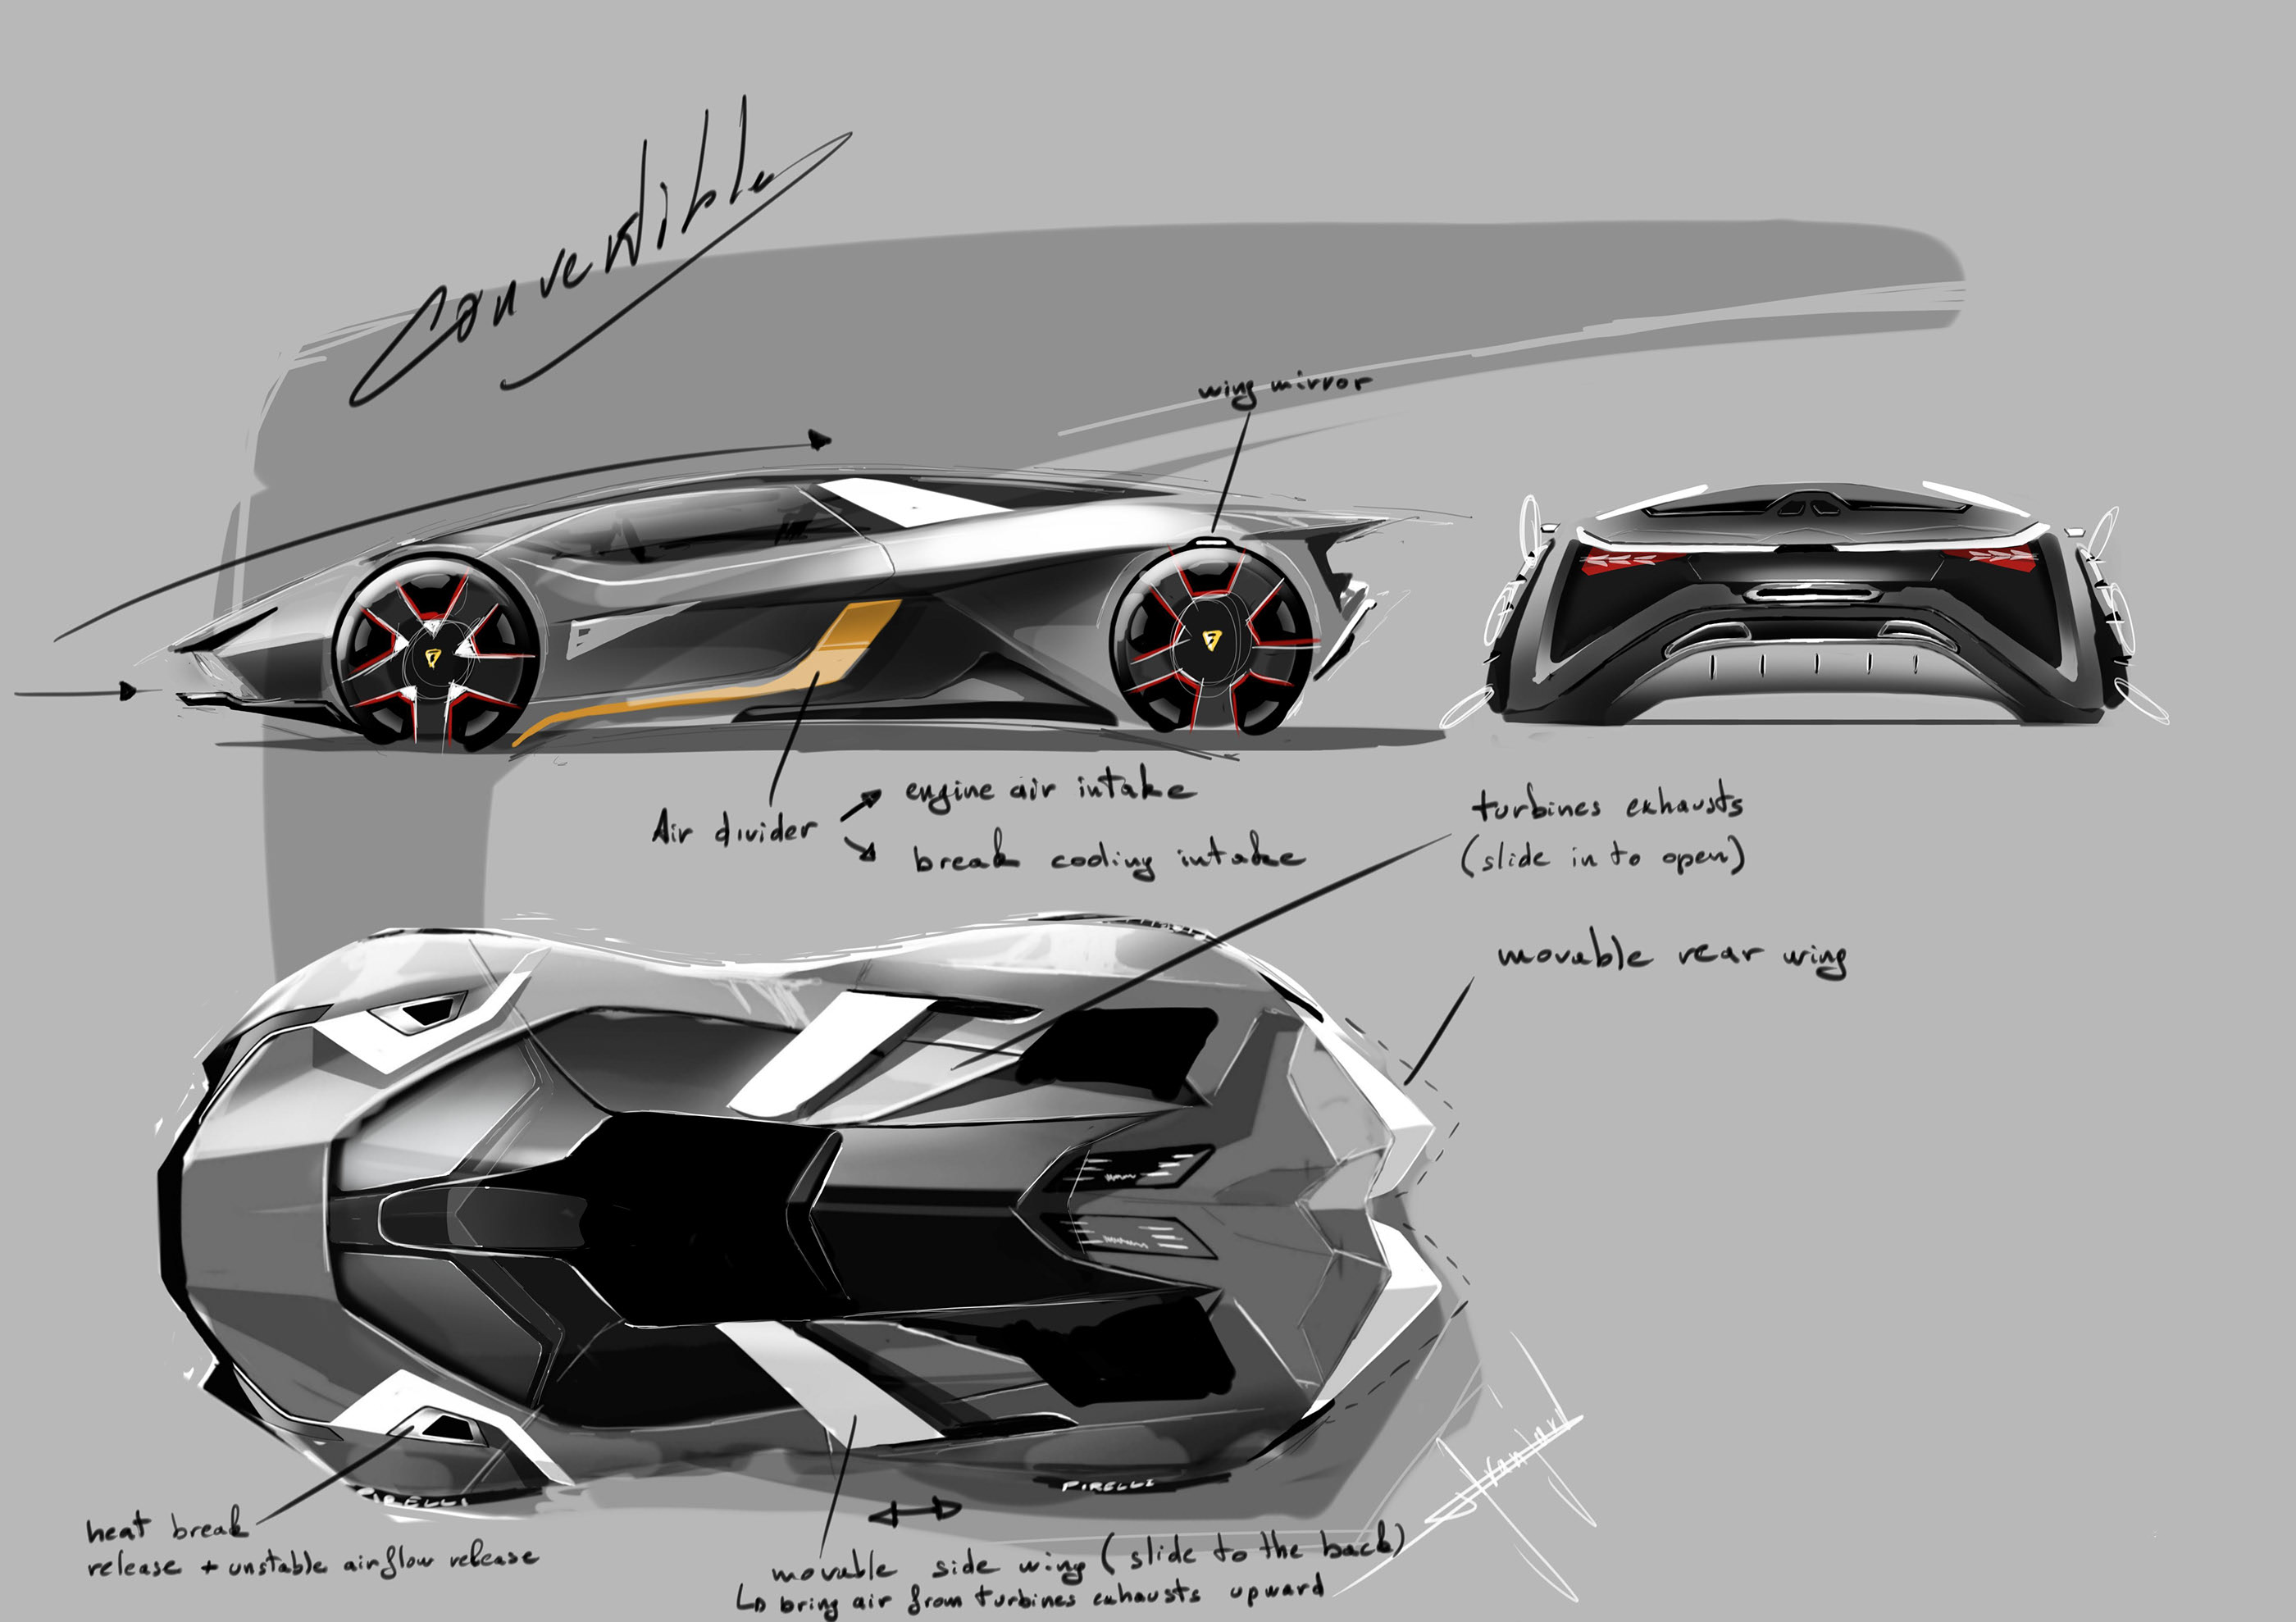 Lamborghini Diamante Concept